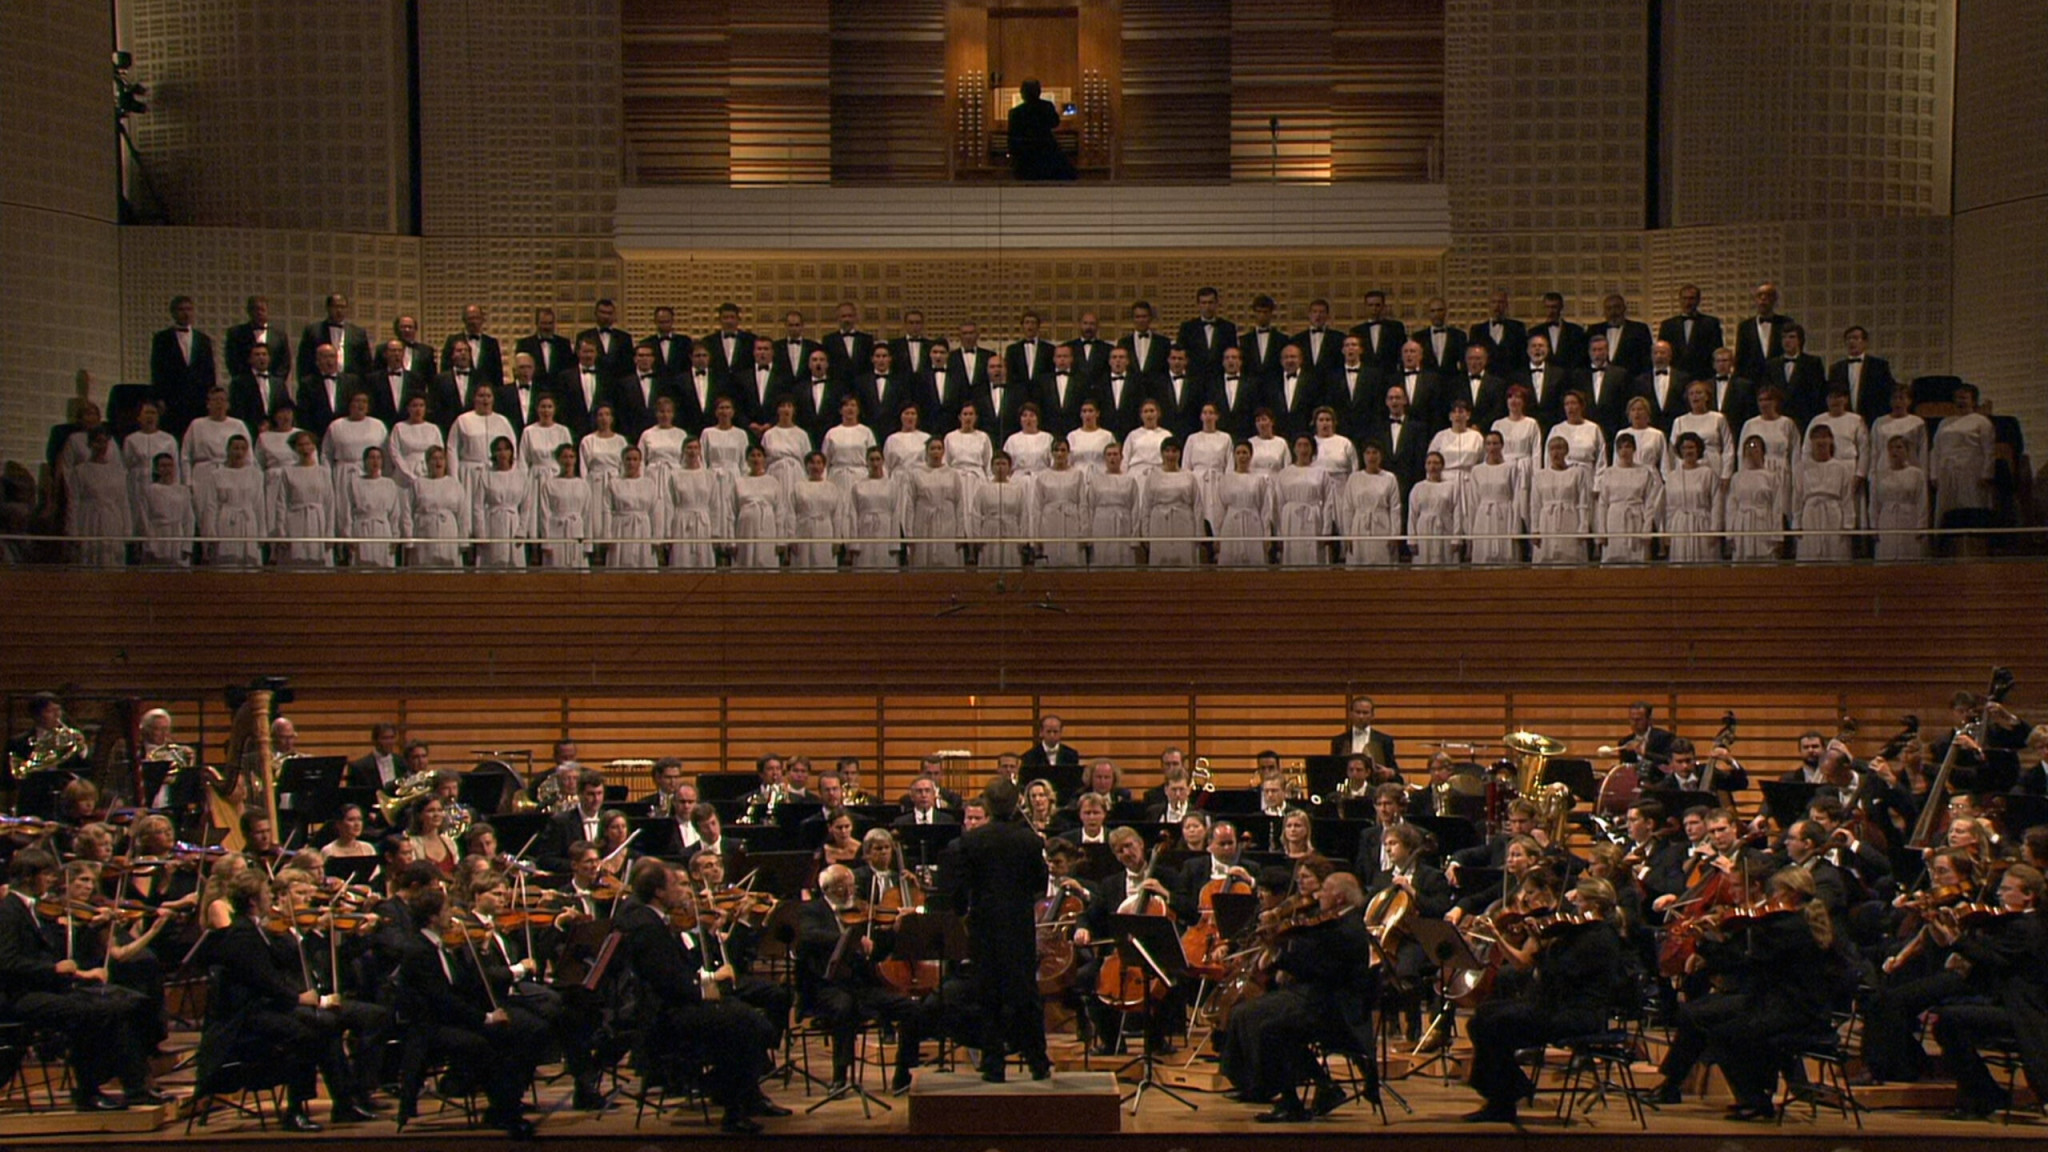 Mahler: Symphony No. 2 'Resurrection': O Schmerz! ... Aufersteh'n (excerpt)